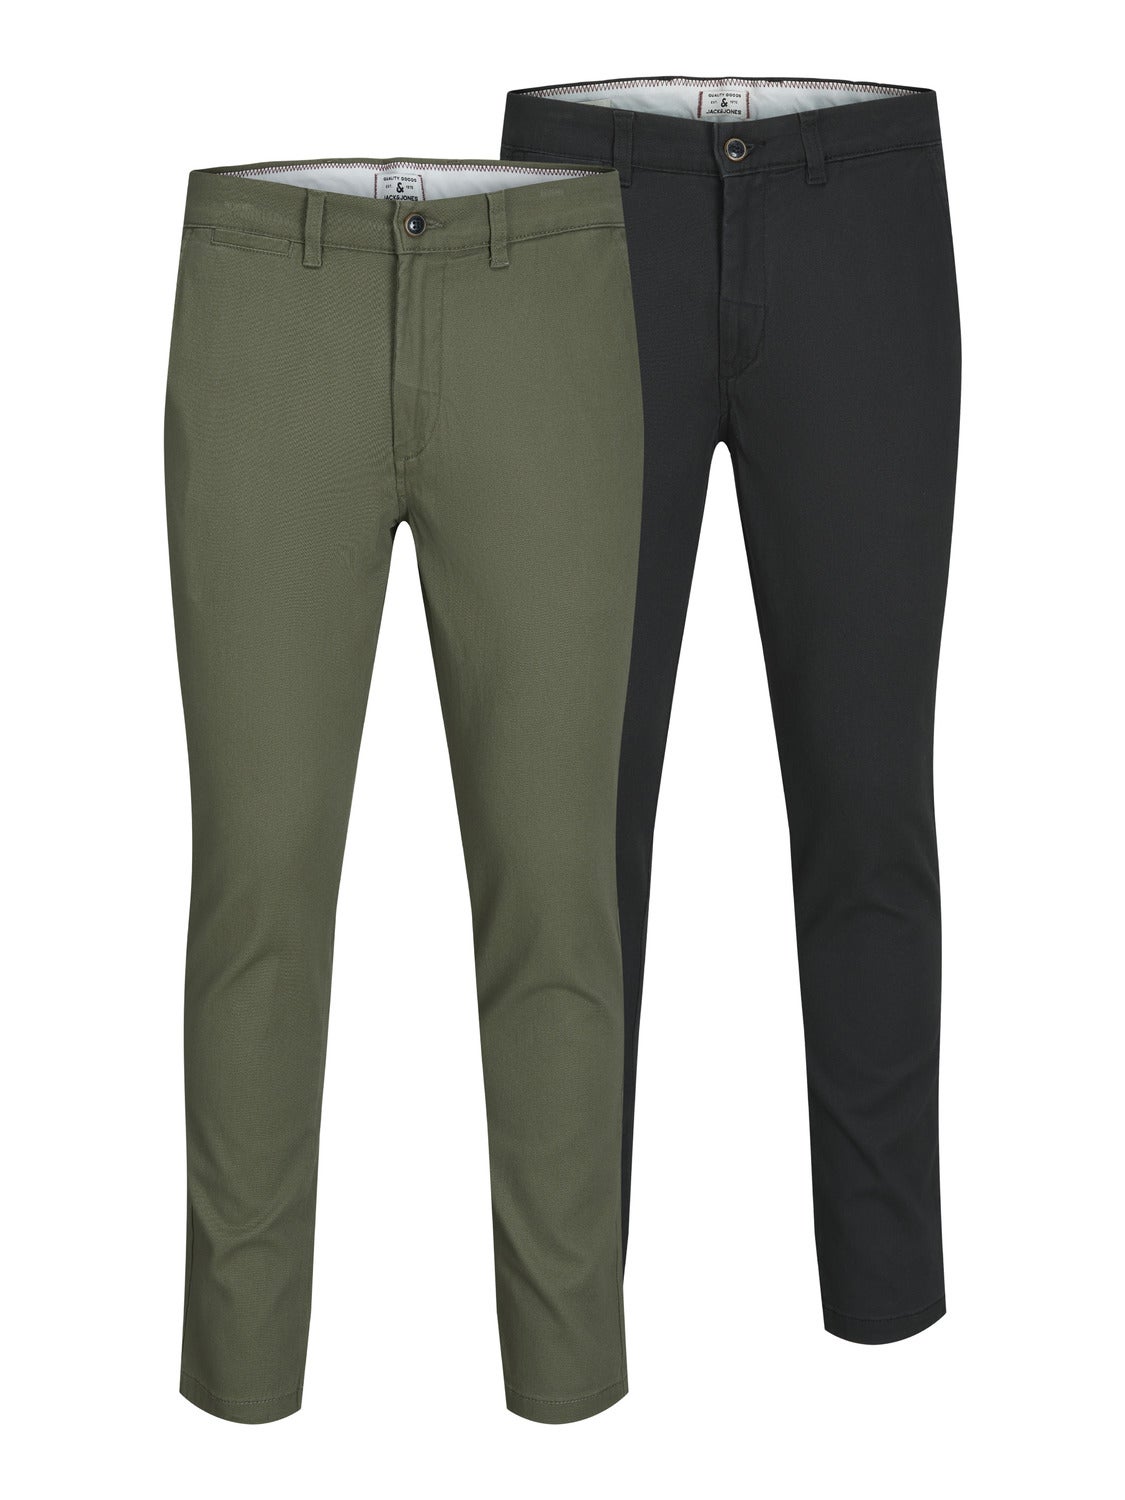 Buy Jet black Trousers & Pants for Men by NETPLAY Online | Ajio.com